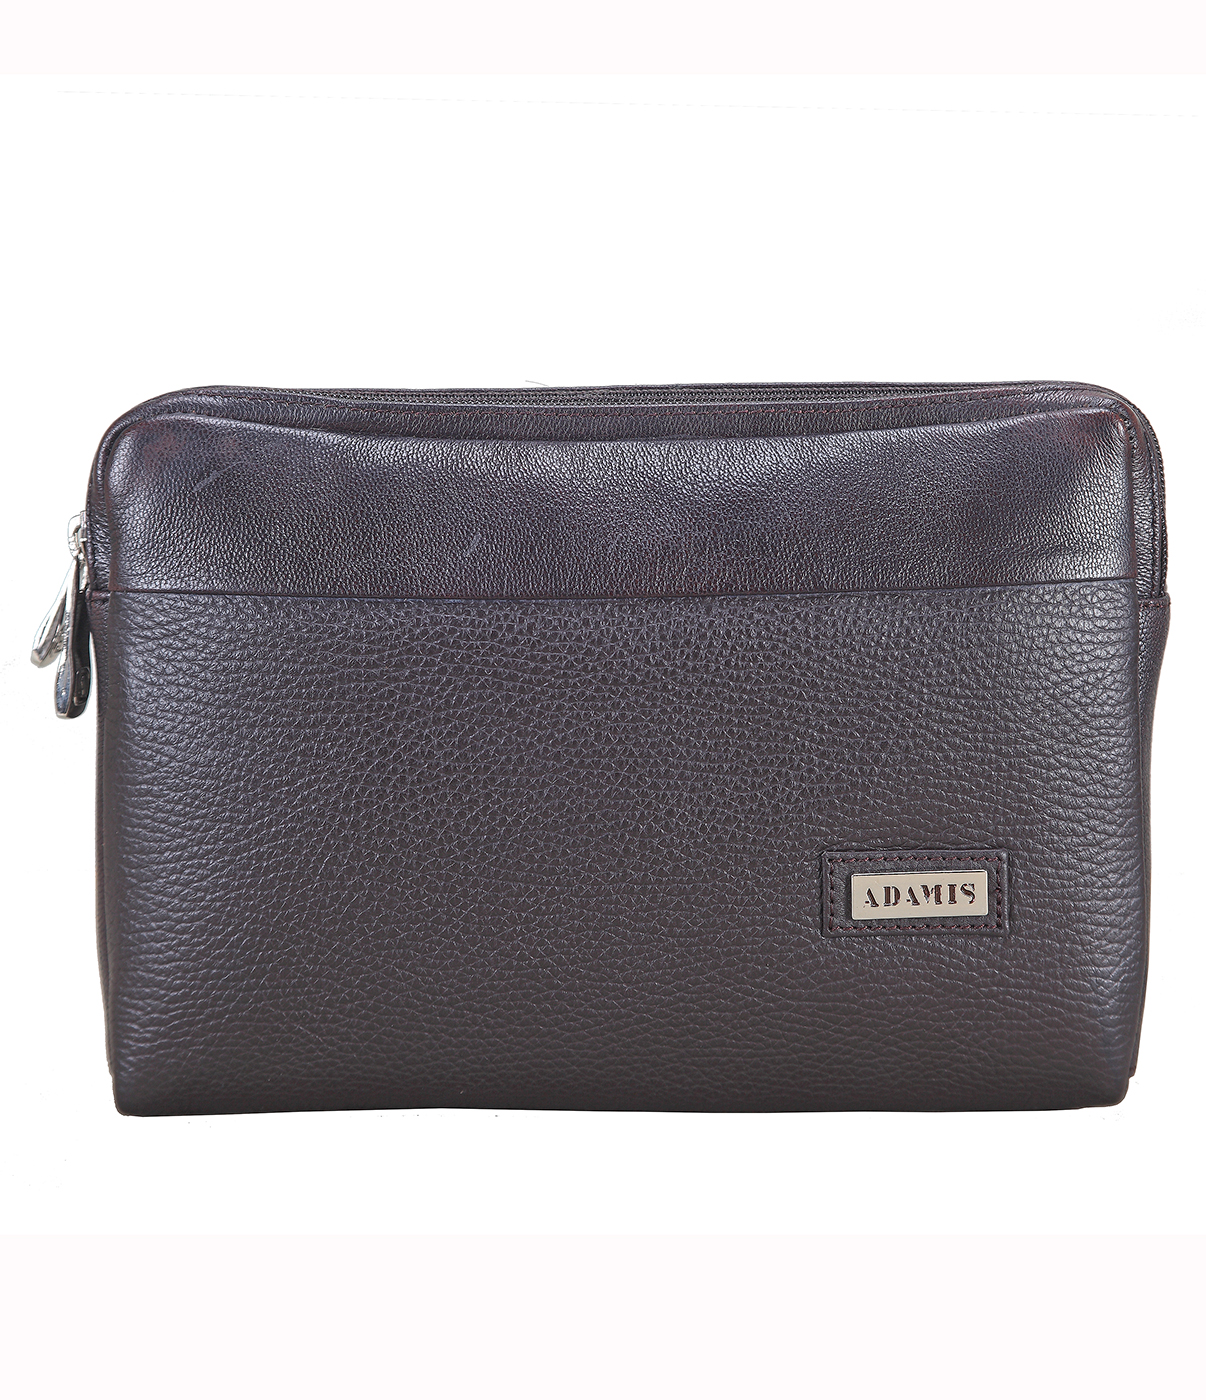 Bag-Fernando-Men's bag cum travel pouch in Genuine Leather - Brown